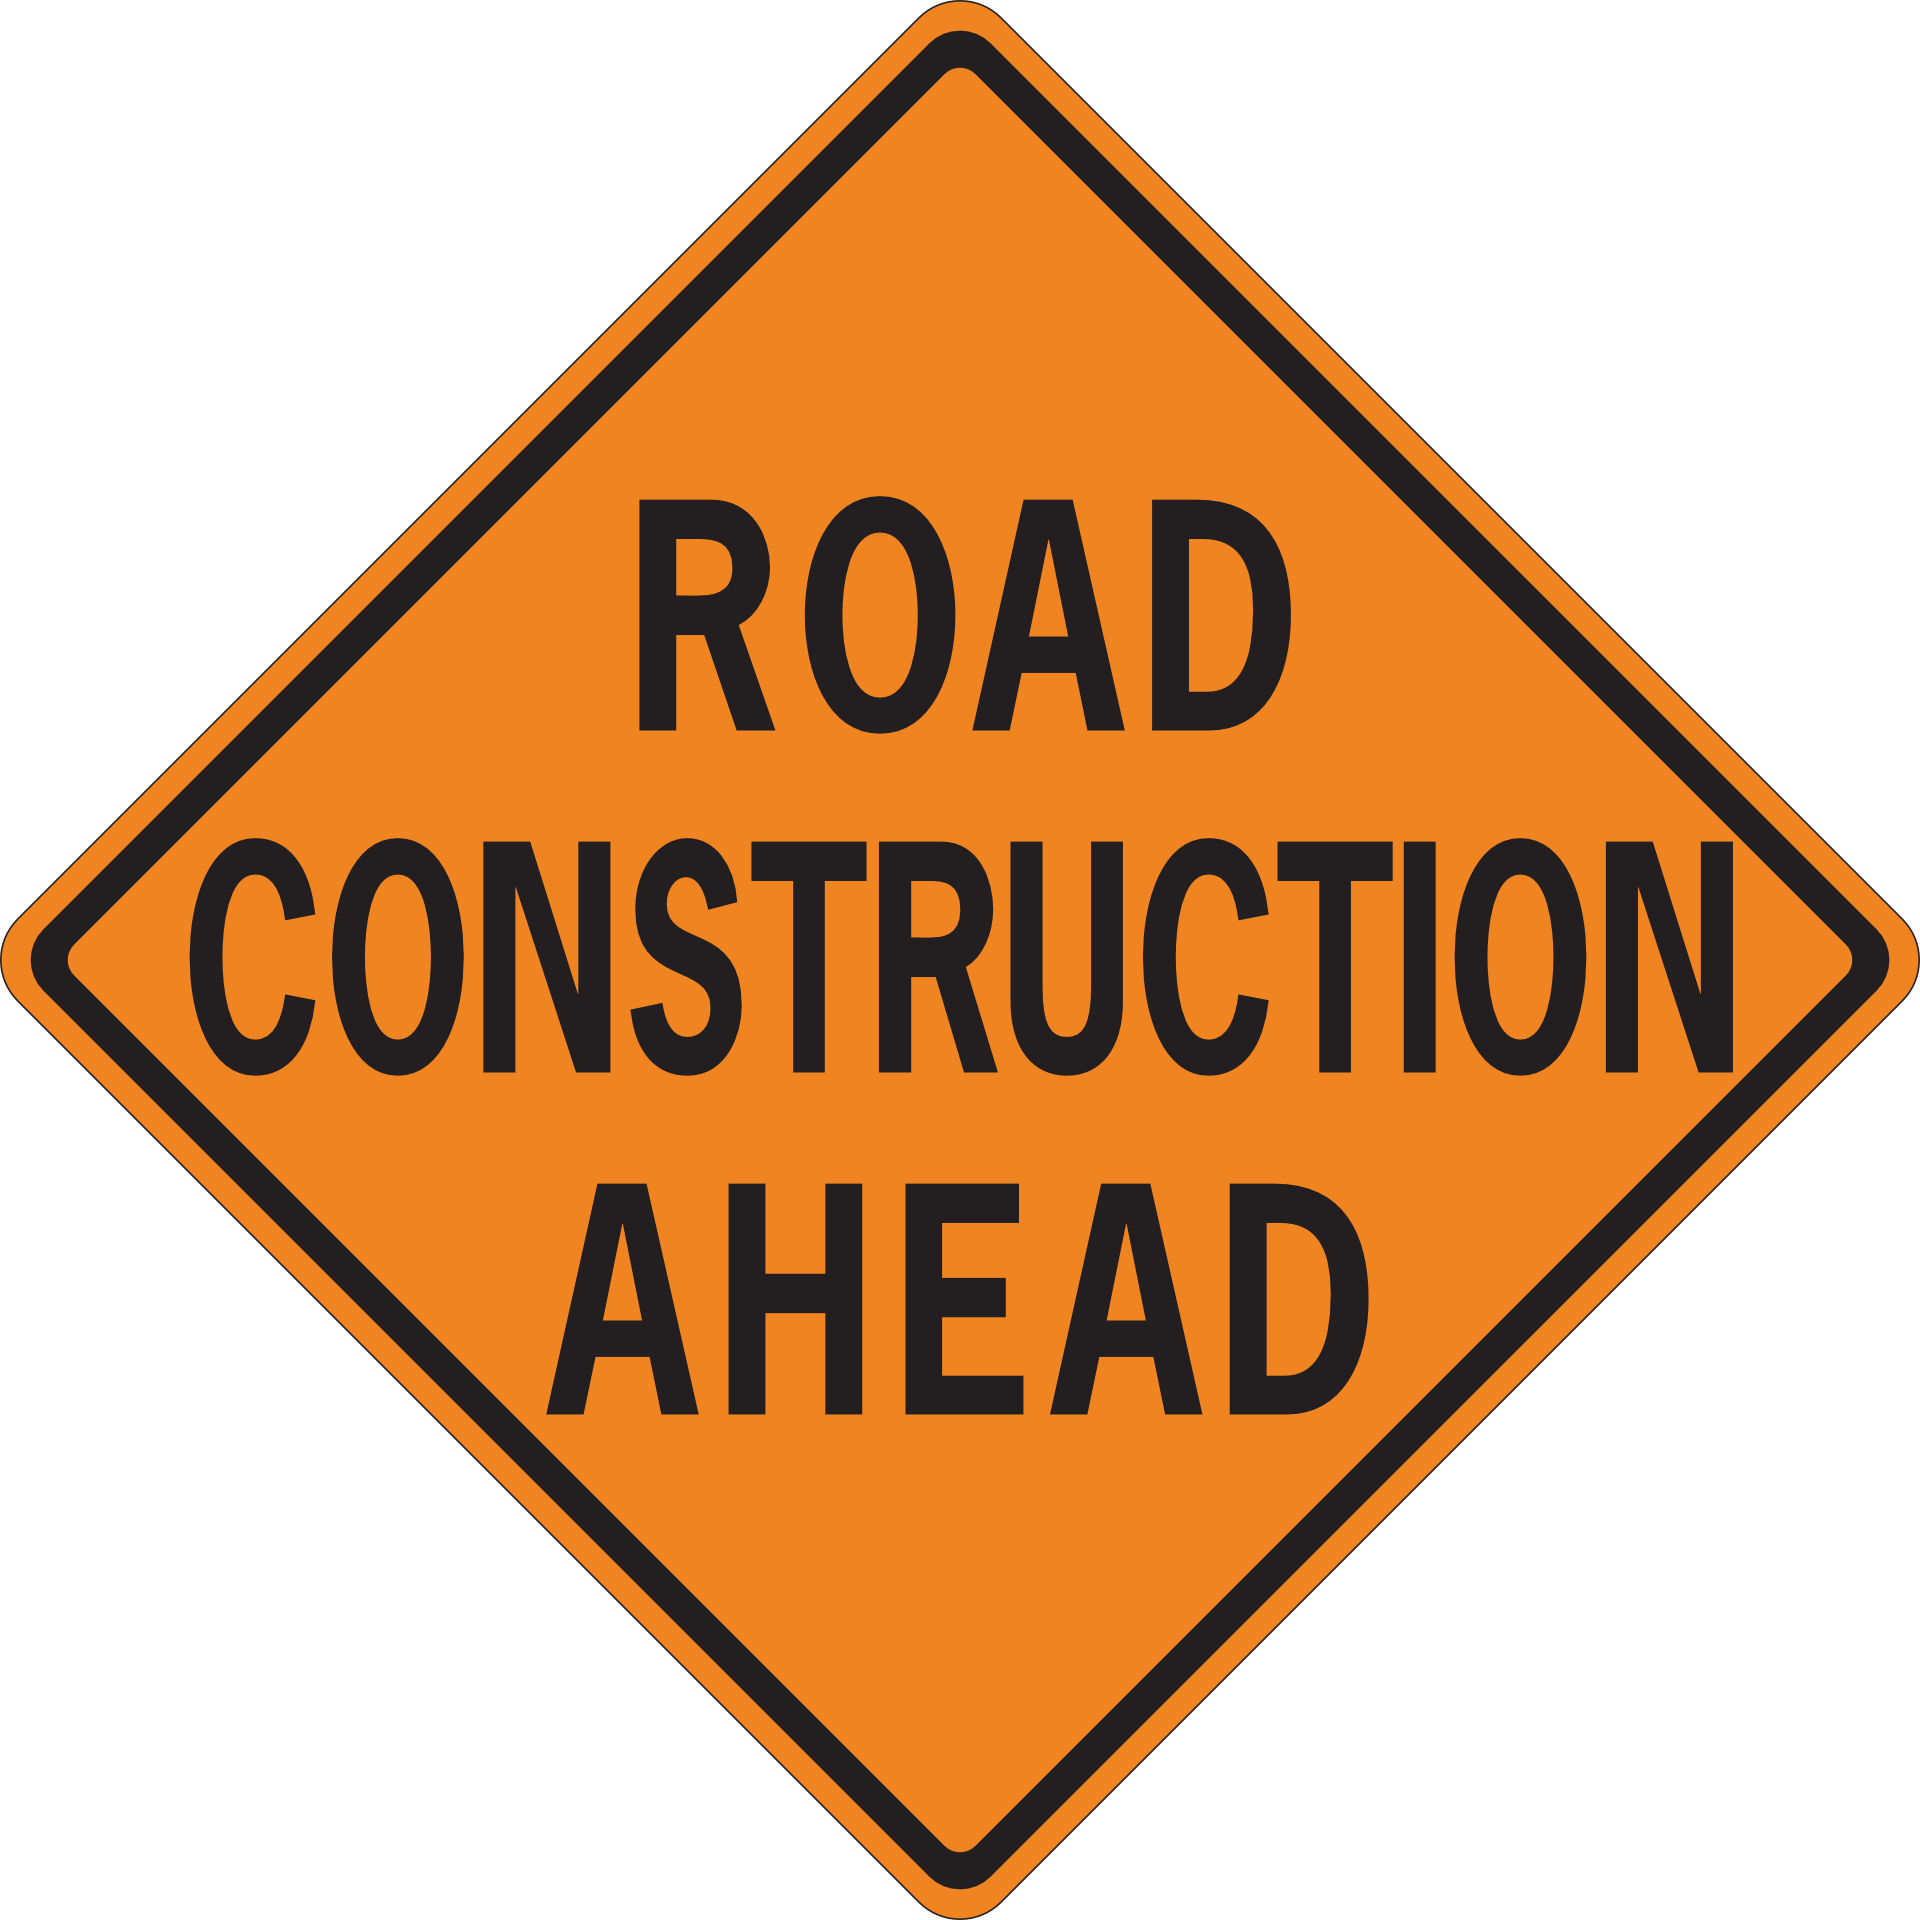 WRIGHT ROAD CONSTRUCTION PROGRESS CONTINUES